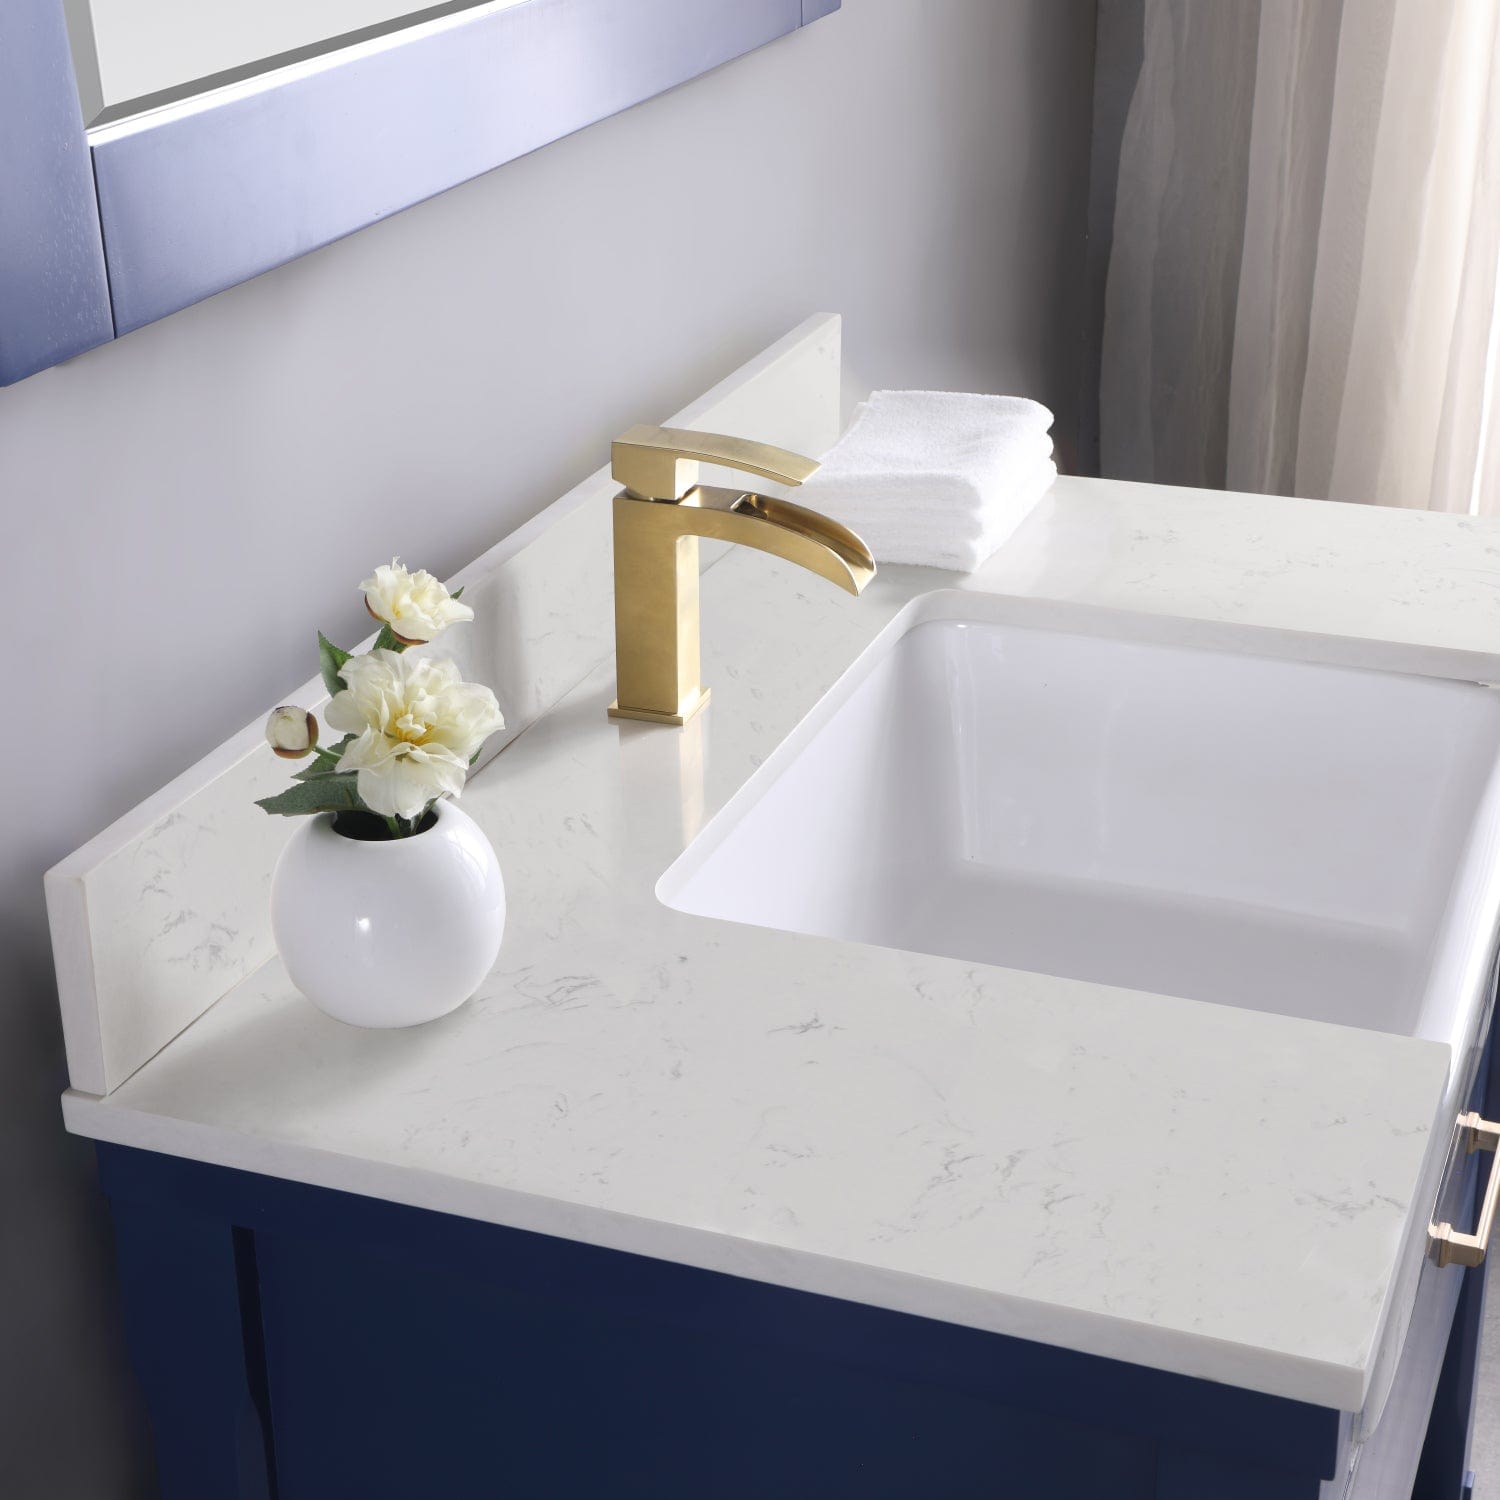 Altair Georgia 36" Single Bathroom Vanity Set in Jewelry Blue and Composite Carrara White Stone Top with White Farmhouse Basin with Mirror 537036-JB-AW - Molaix631112970556Vanity537036-JB-AW